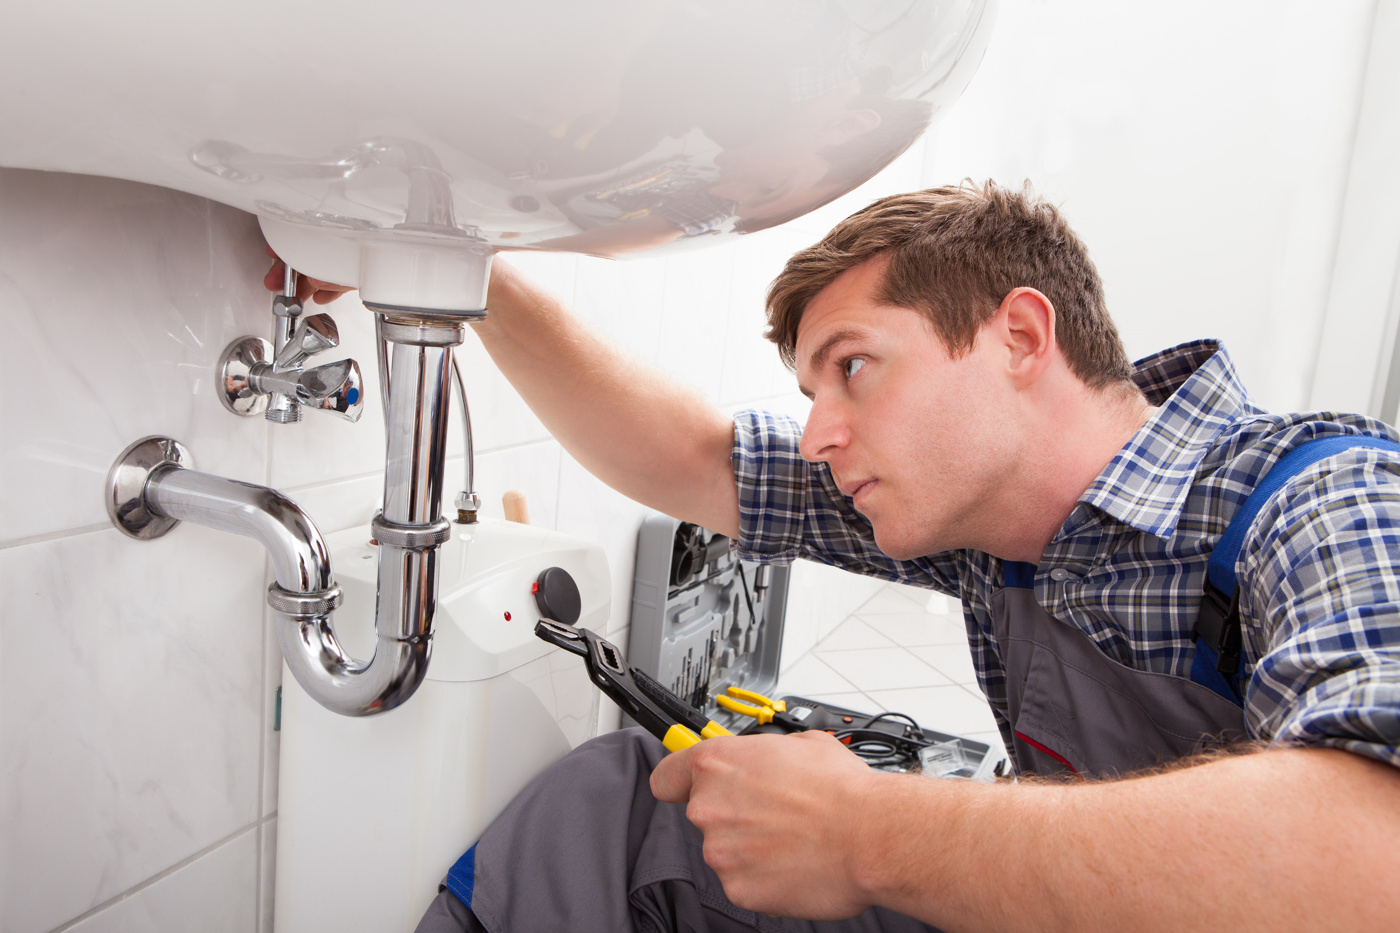 A head plumber installs a washbasin in a customer's bathroom.